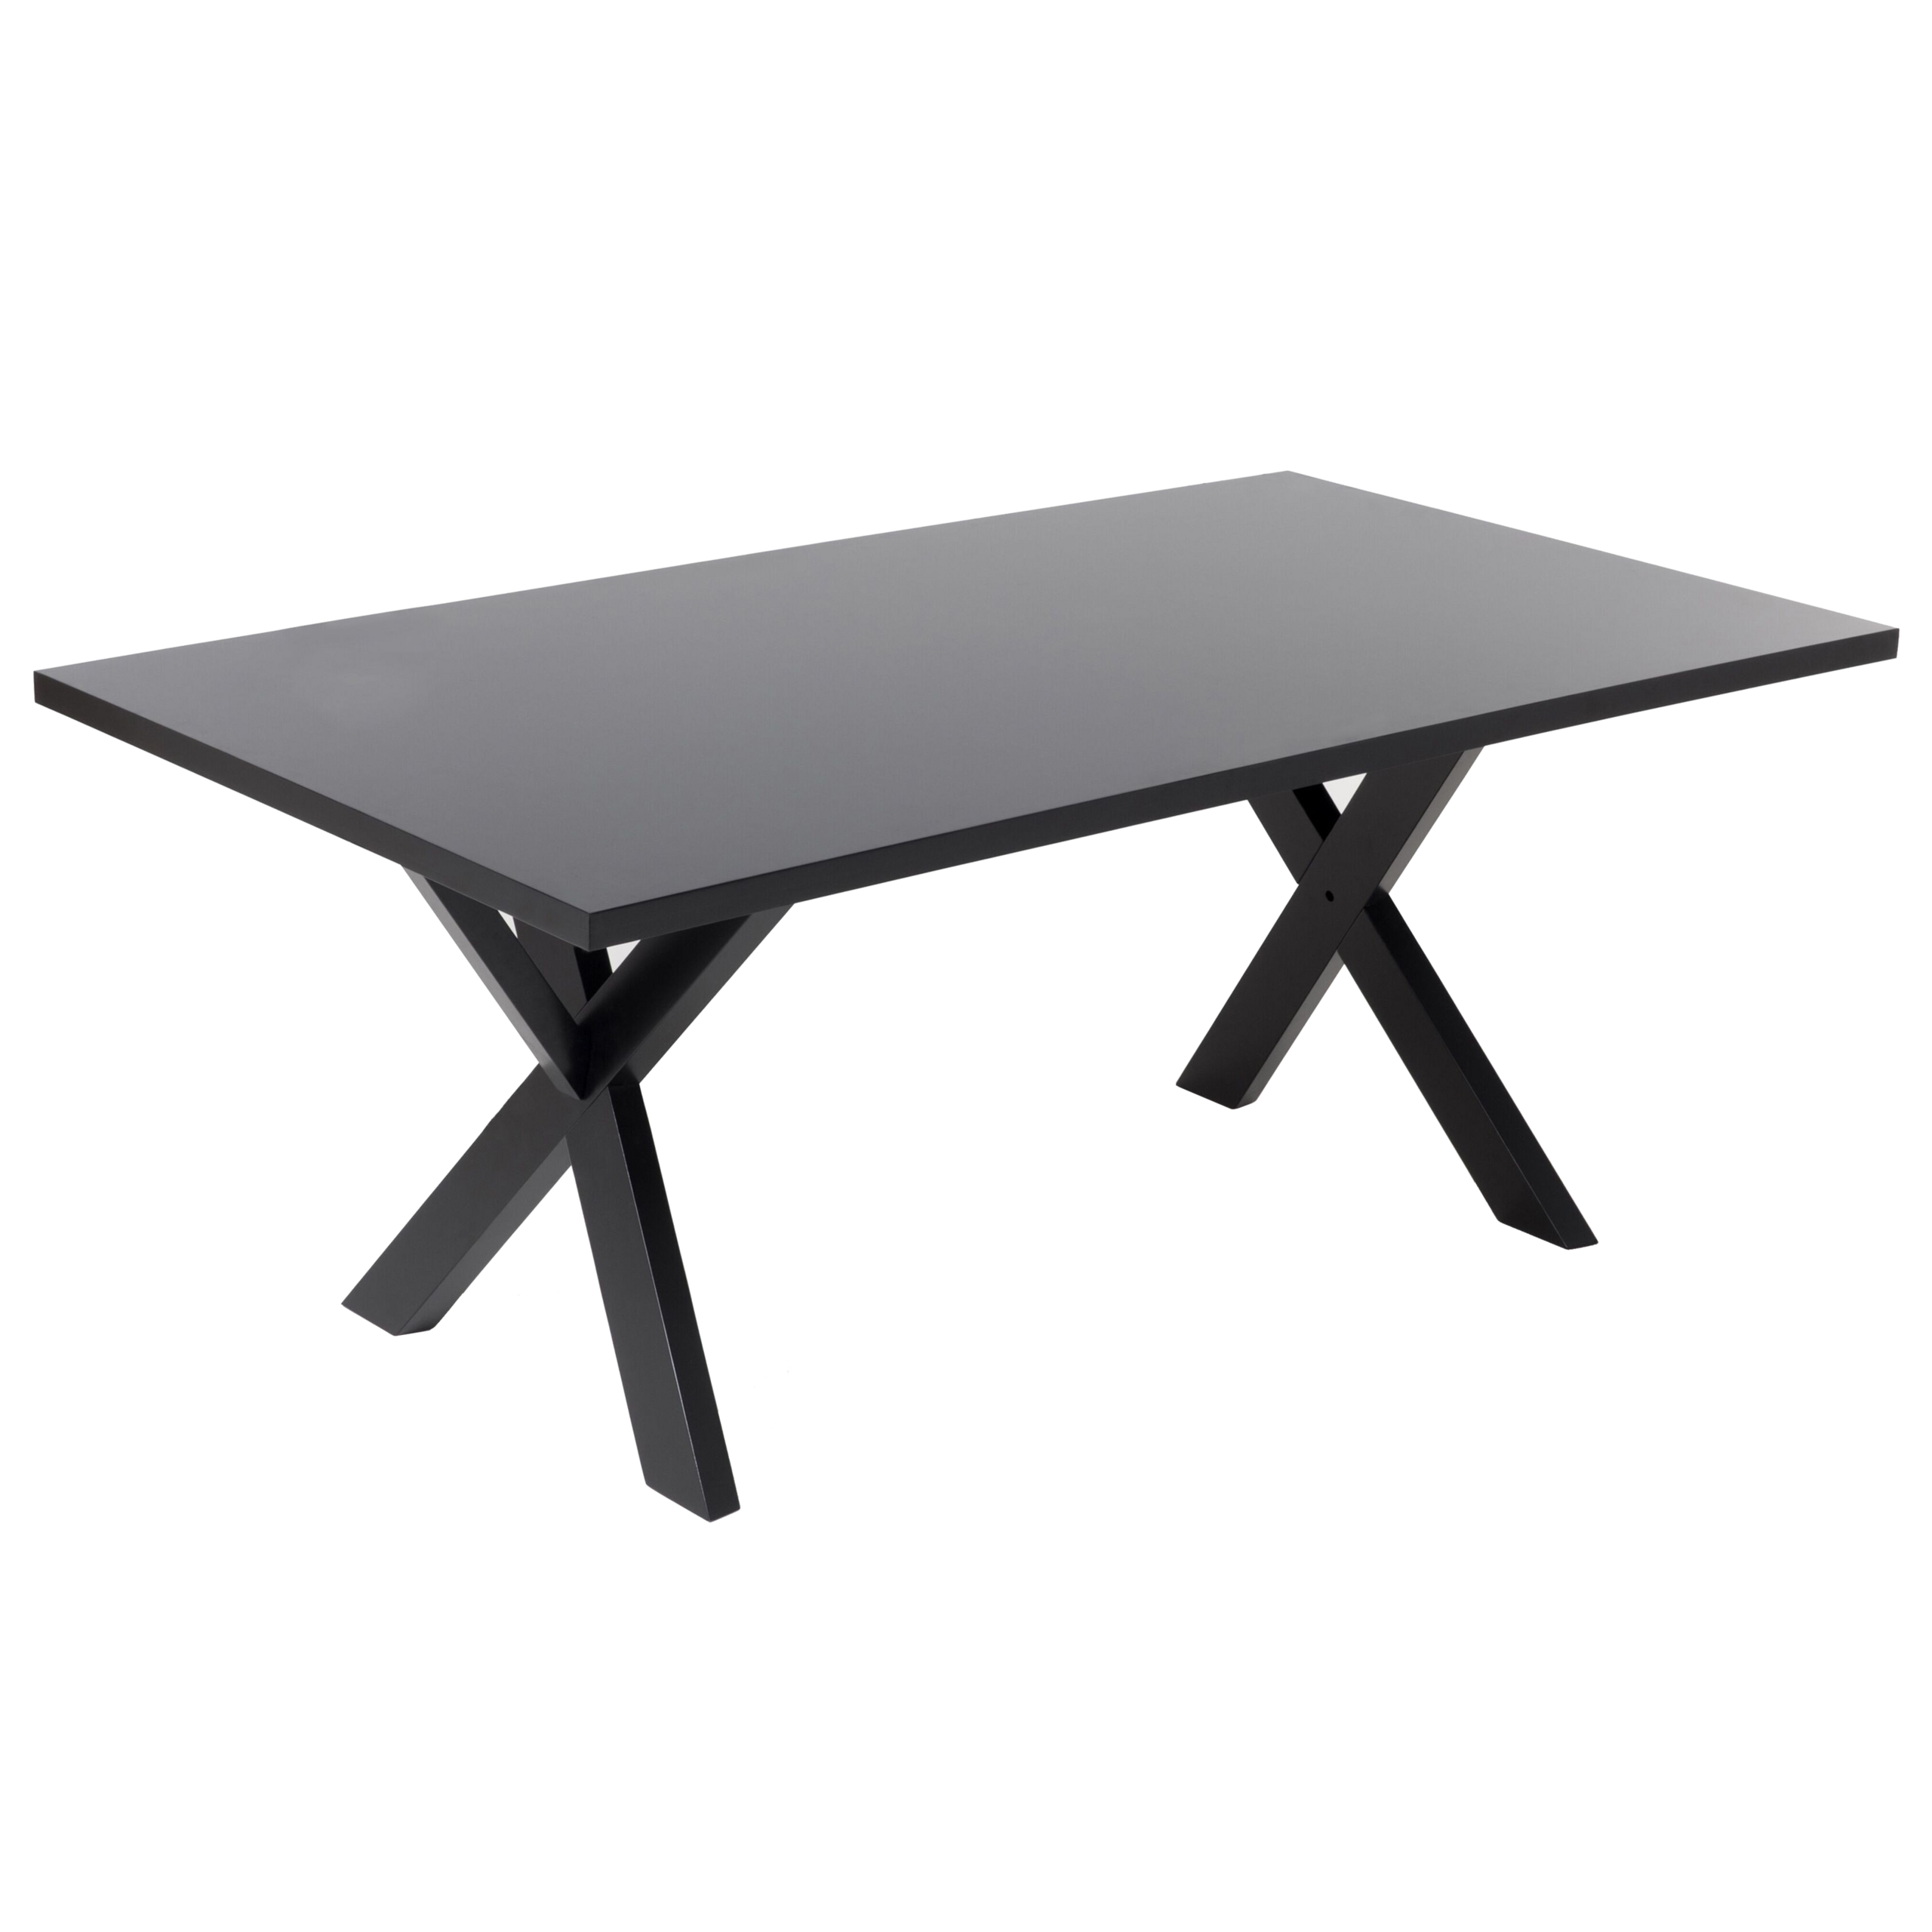 Beliani Dining Table Black Tabletop 77 x 180 x 80 cm X-cross Solid Wood Legs Kitchen Table